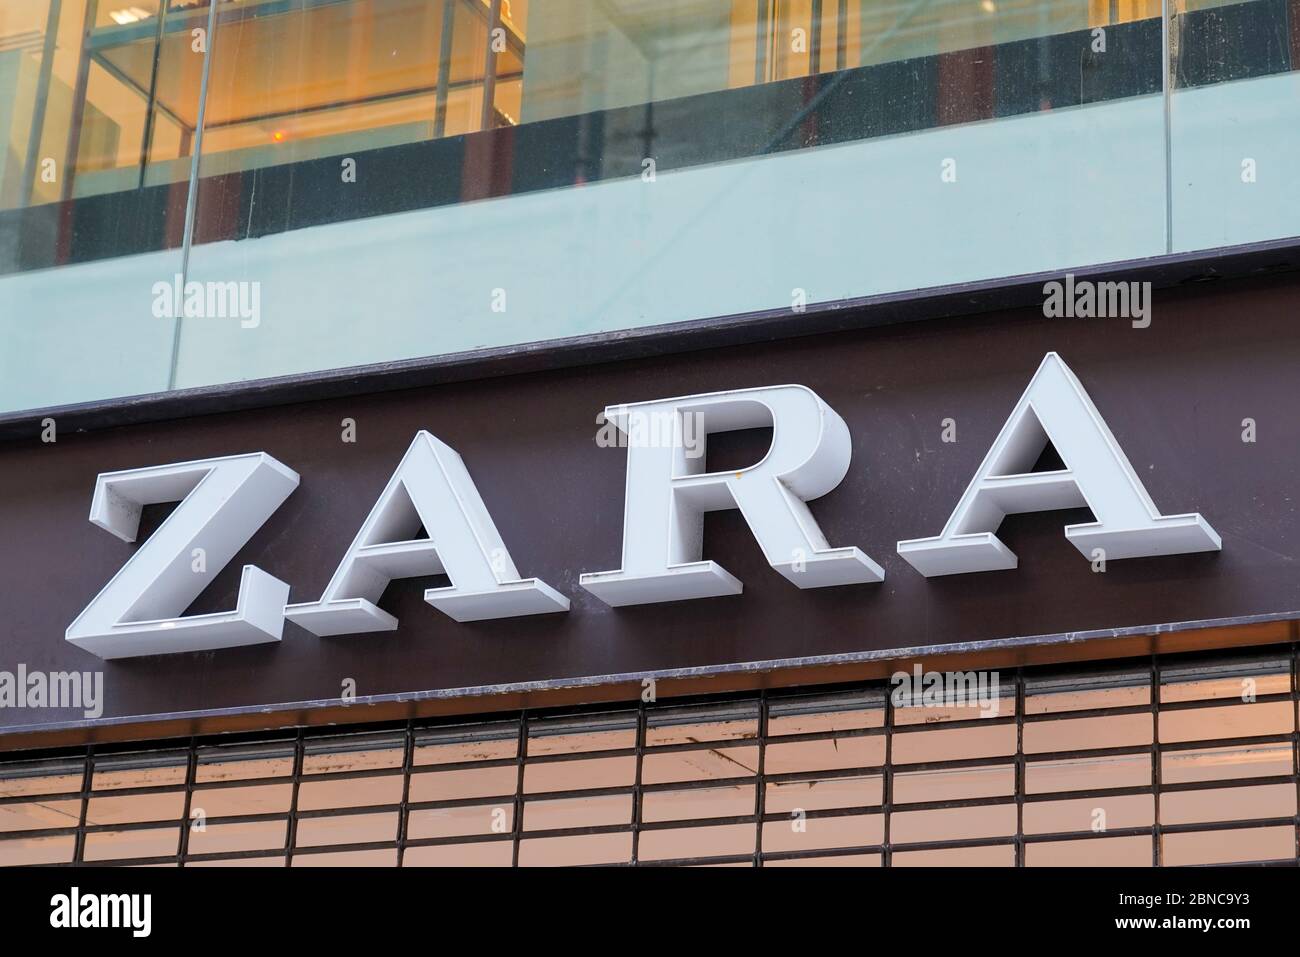 Bordeaux , Aquitaine / France - 05 12 2020 : Zara logo sign fashion spain  clothing store shop brand Stock Photo - Alamy